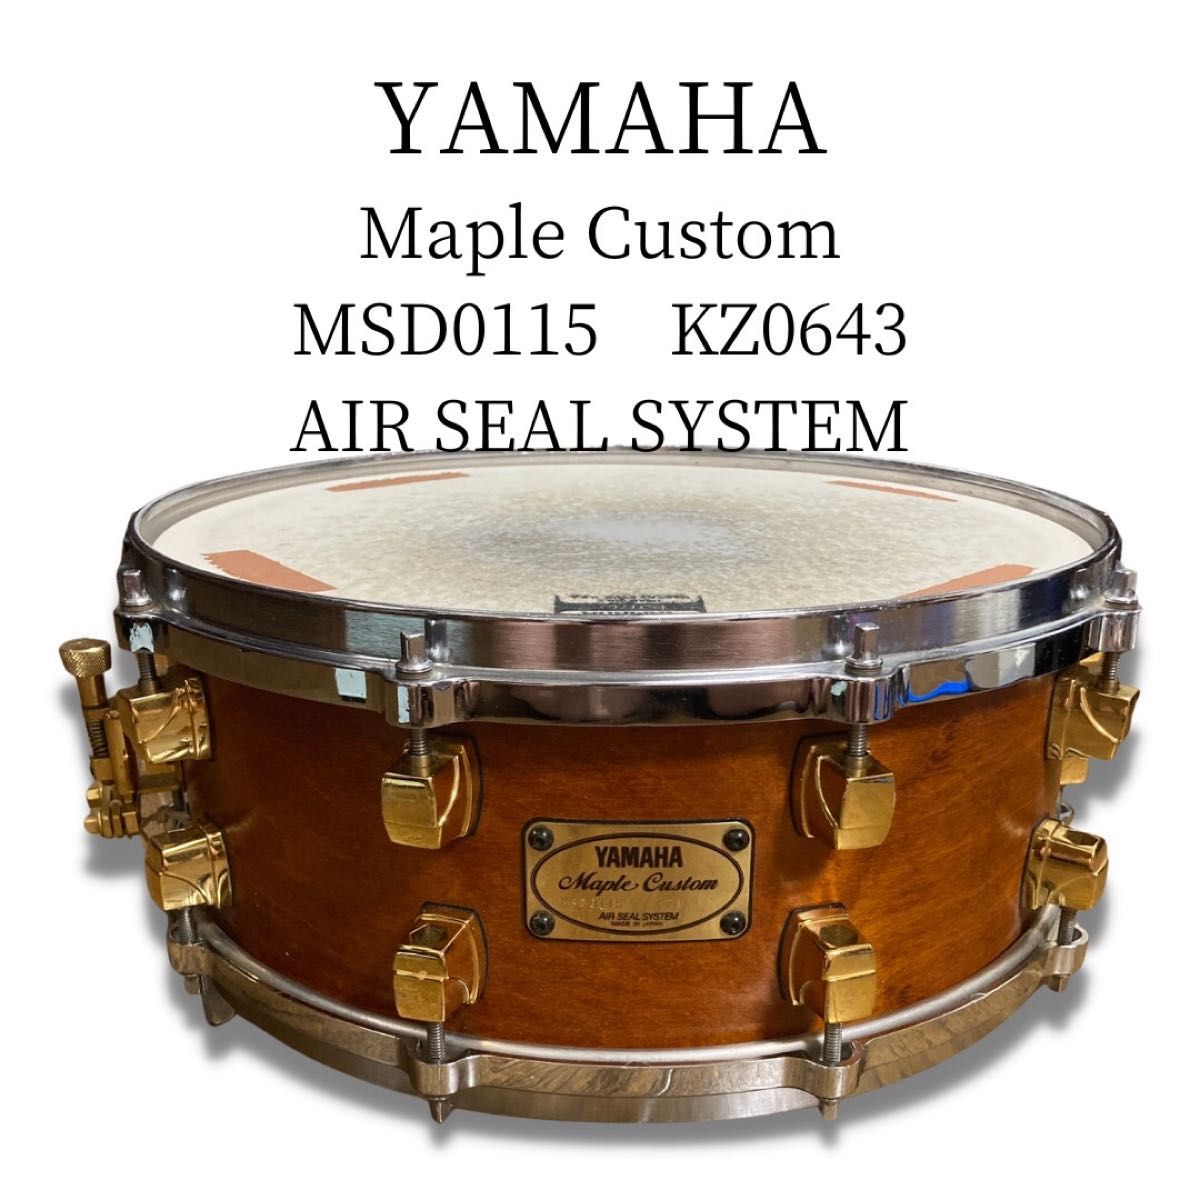 YAMAHA maple customスネアドラム - 通販 - gofukuyasan.com